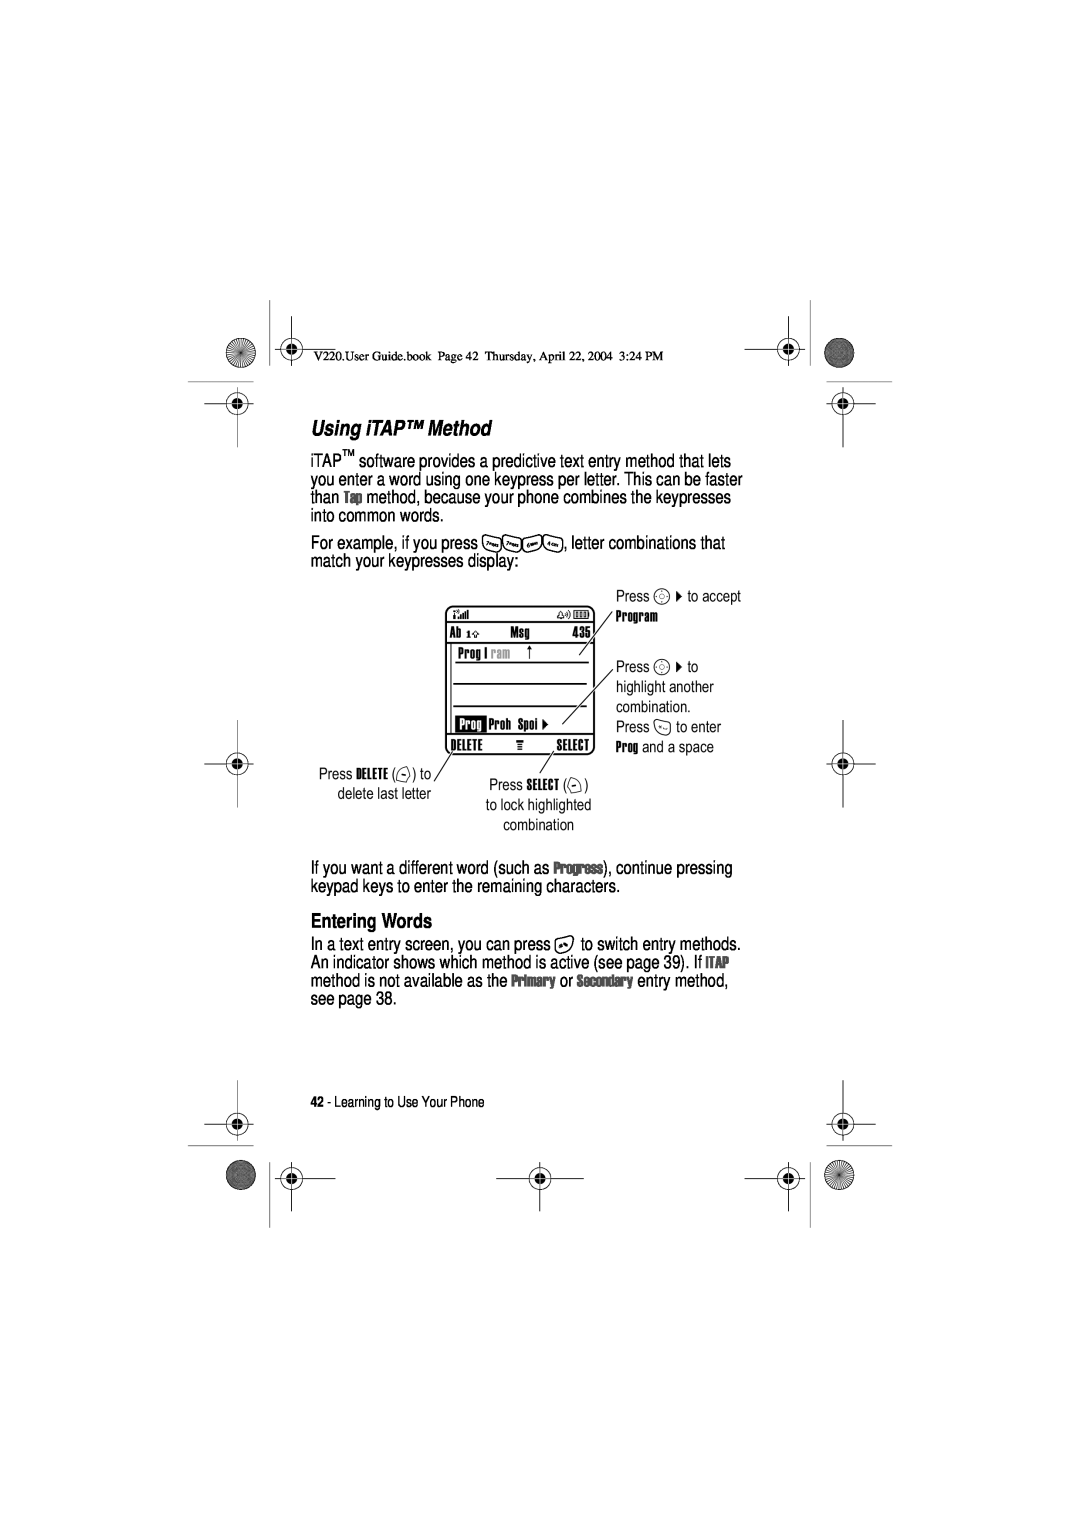 Motorola V220 manual Using iTAP Method, Entering Words 